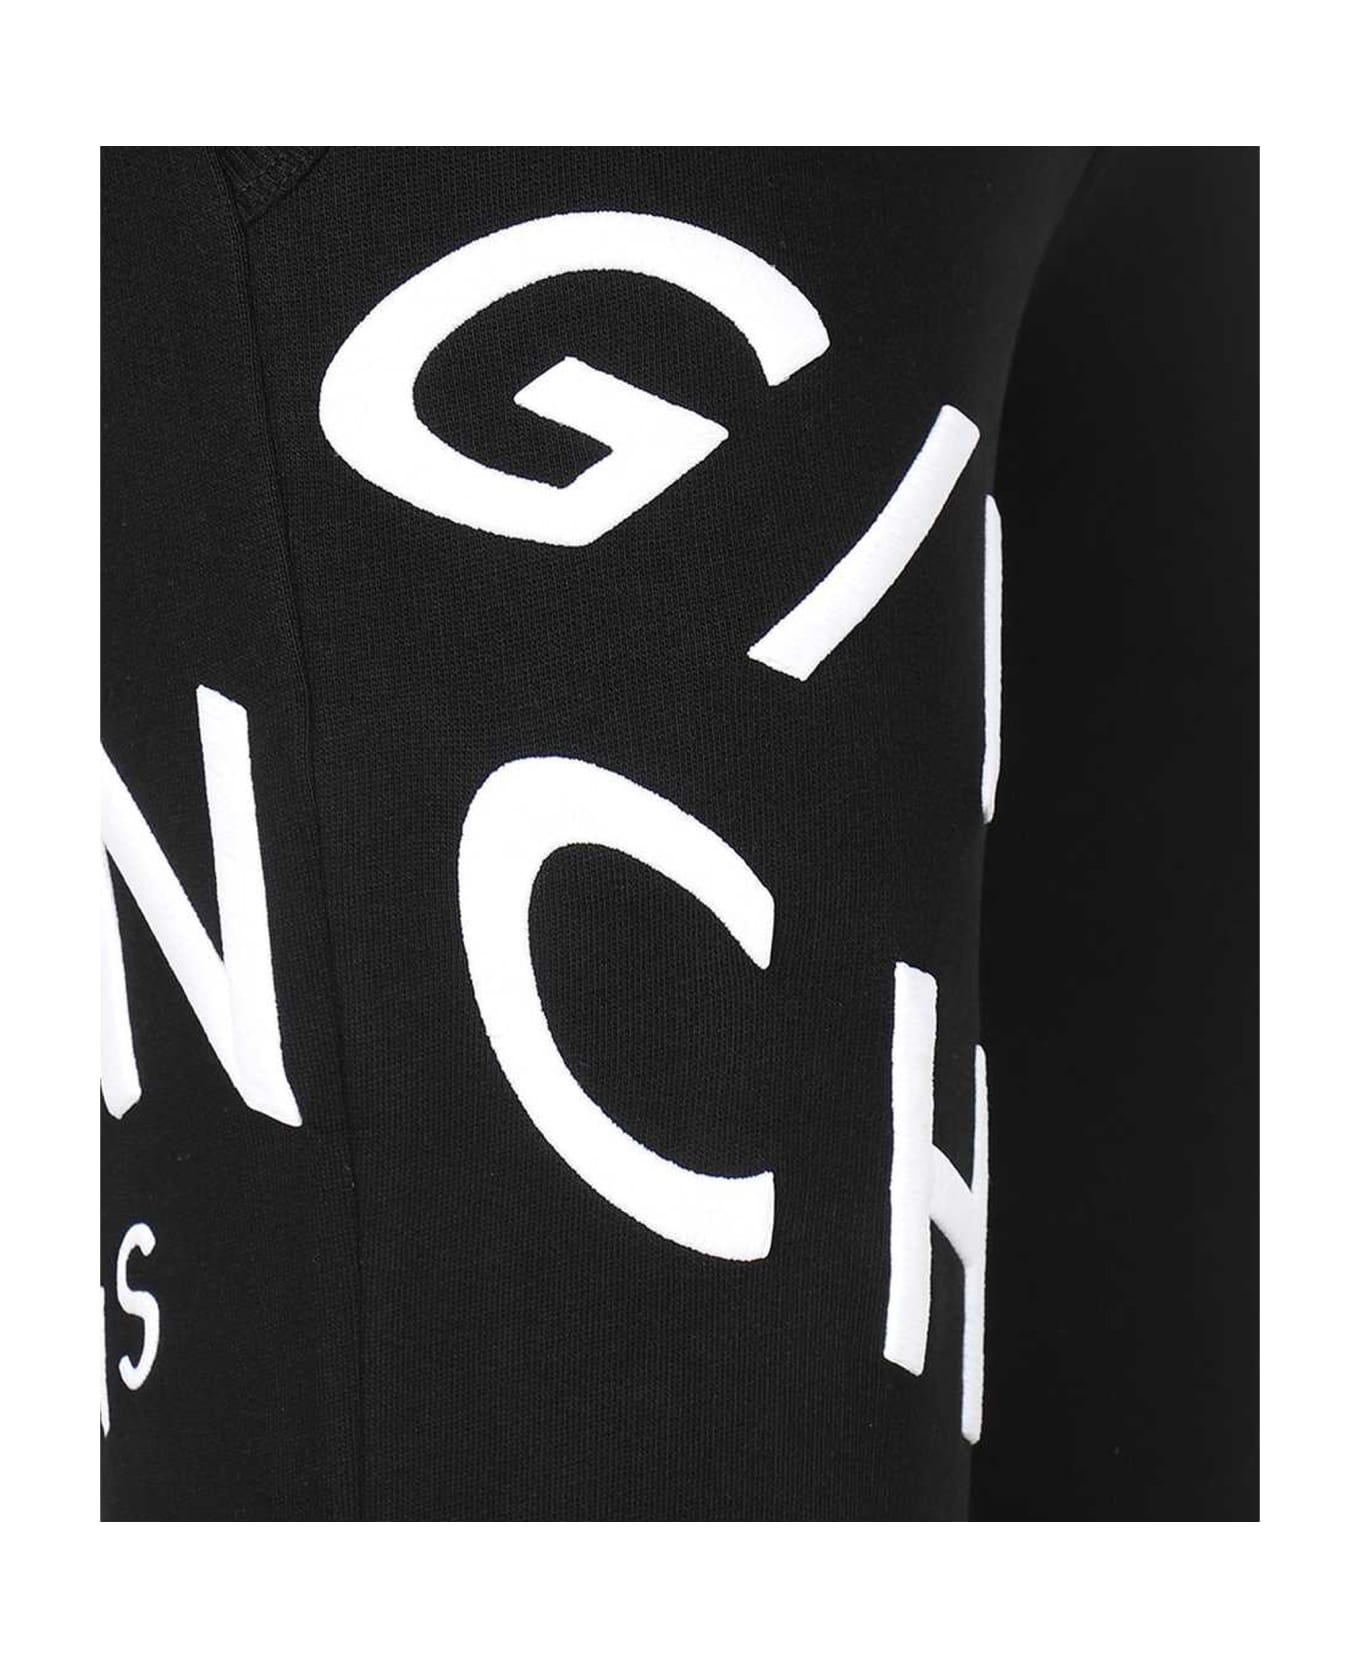 Givenchy Cotton Logo Pants - Black スウェットパンツ